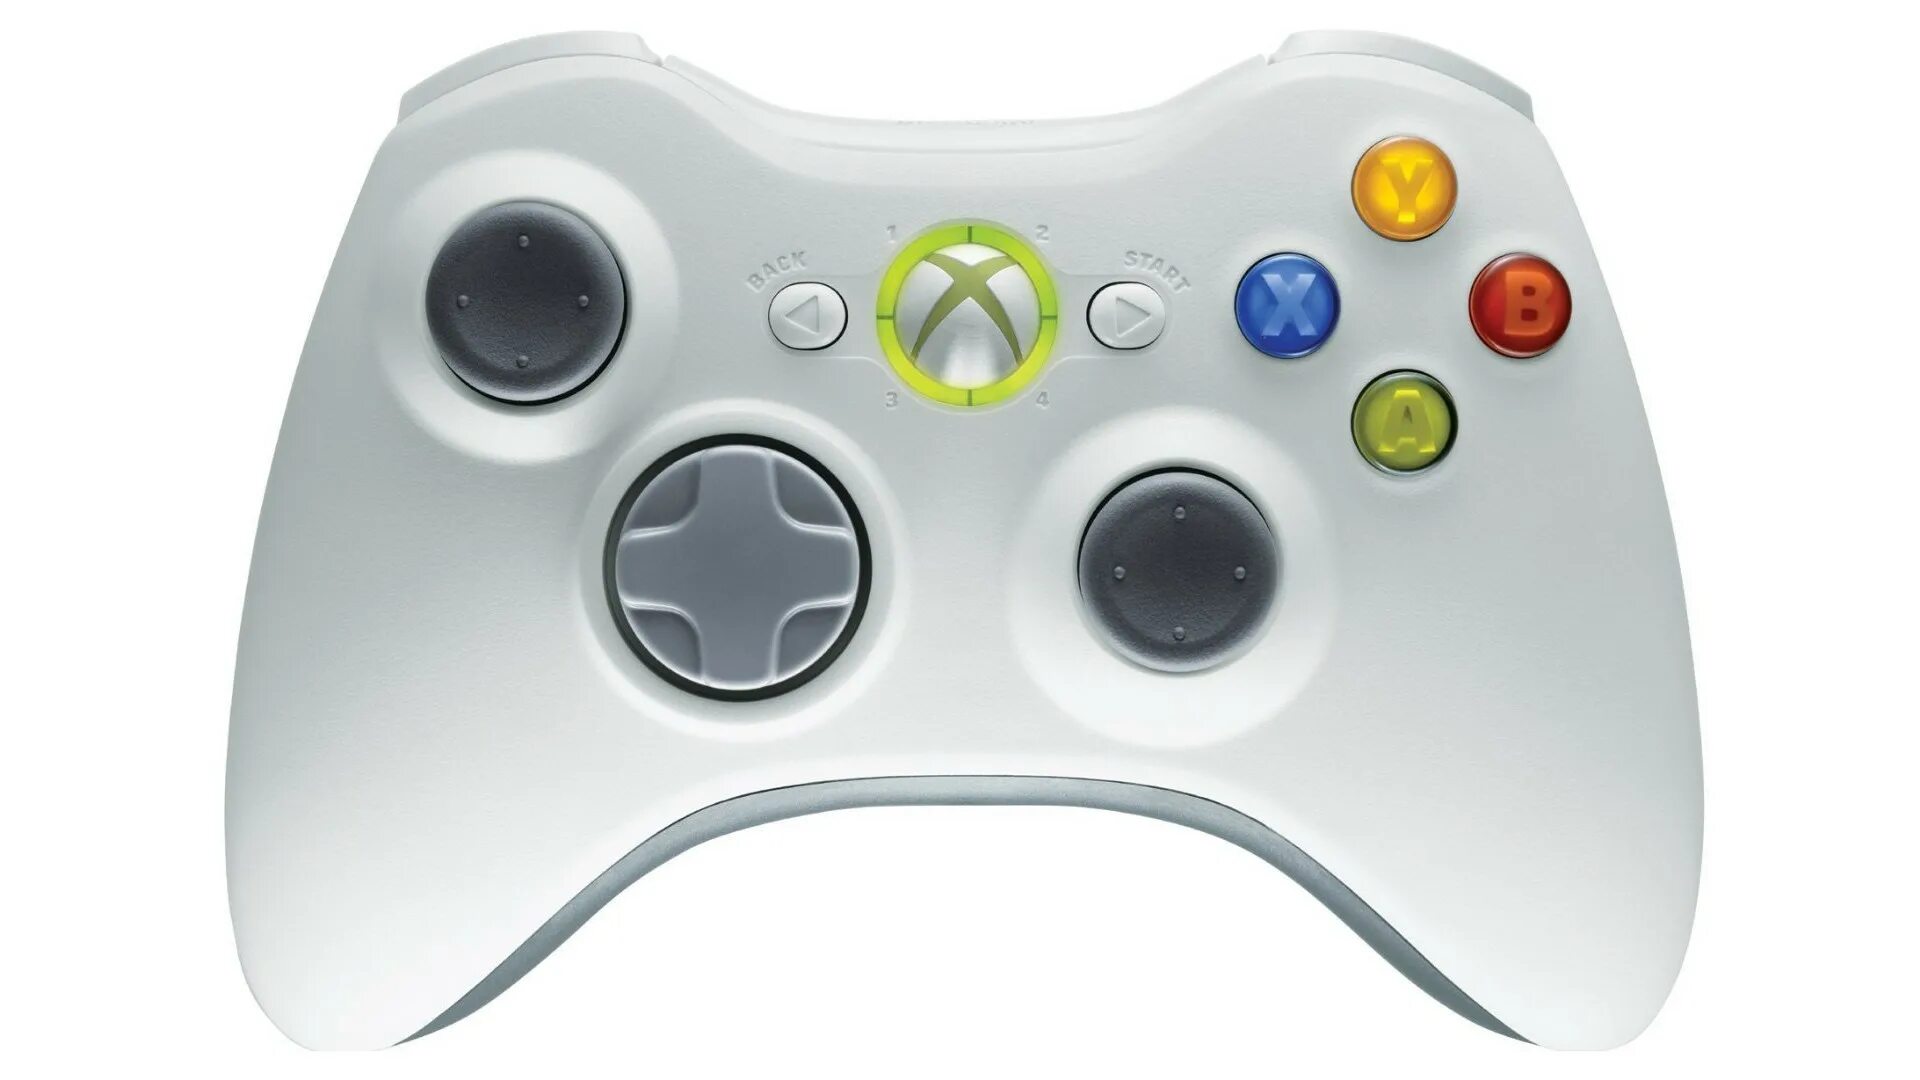 Xbox 360 life. Xbox 360 Controller. Геймпад Xbox 360 bmp. Геймпад Xbox 360 для Xpadder. Джойстик хбокс 360 bmp.